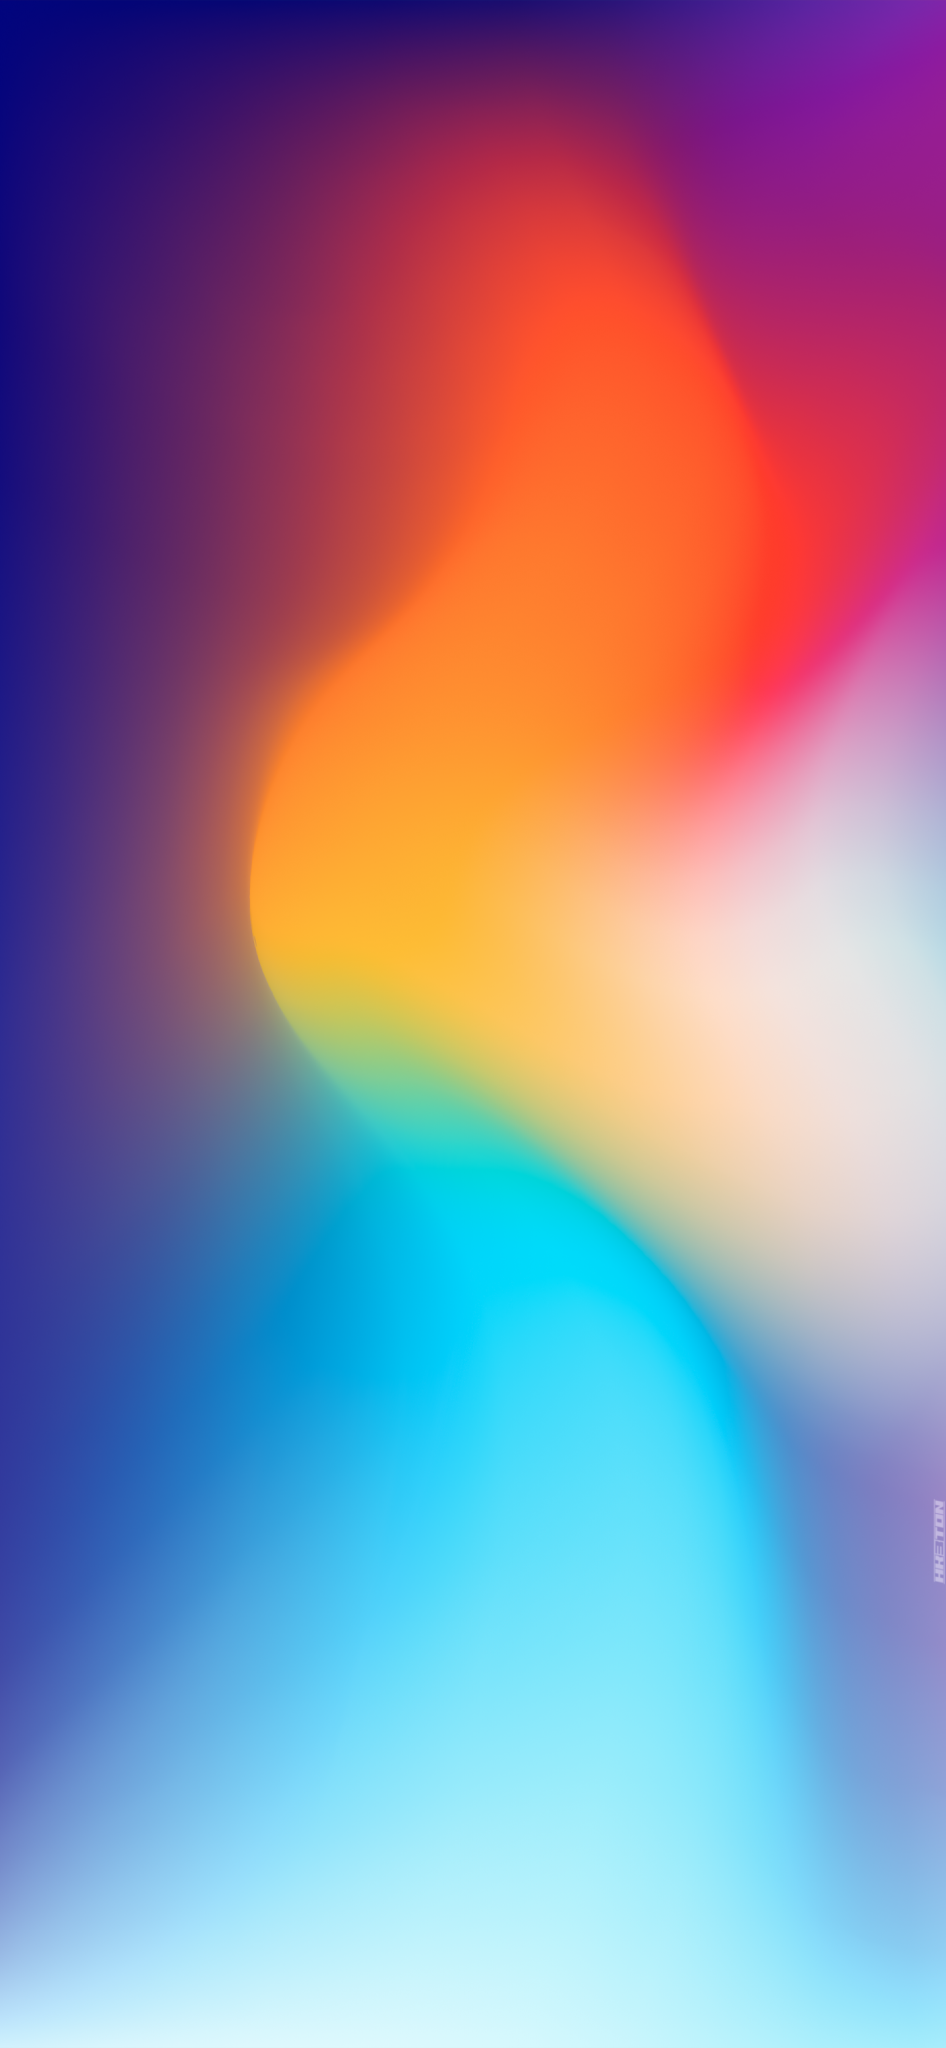 iOS16-6-Colors-by-hk3ton | Zollotech